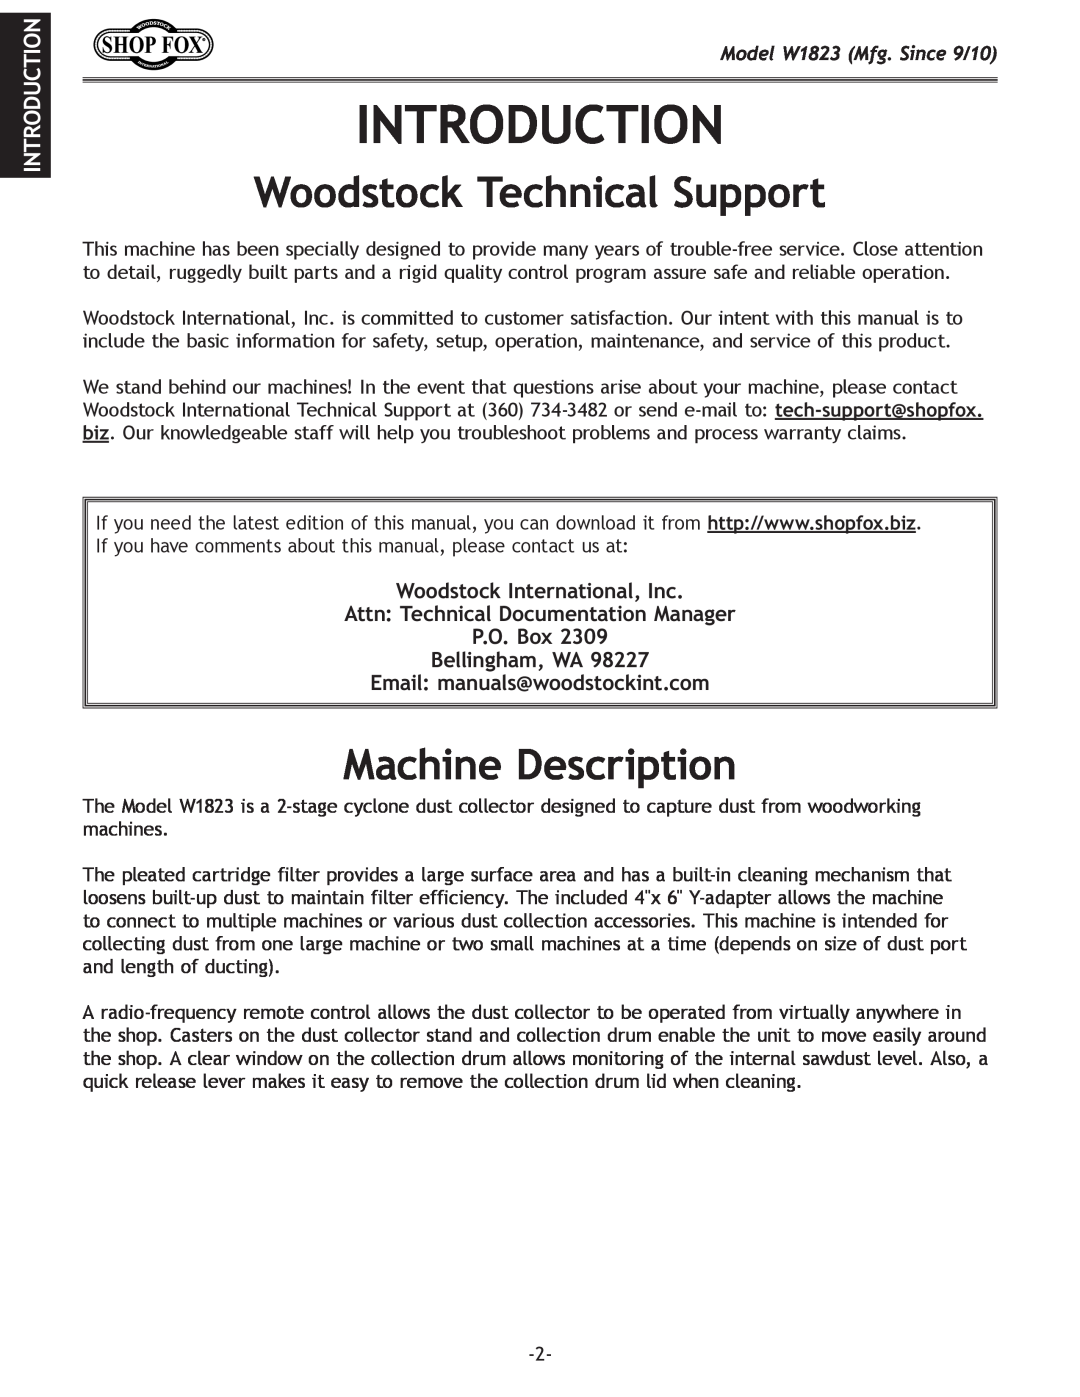 Woodstock manual Introduction, Woodstock Technical Support, Machine Description, Model W1823 Mfg. Since 9/10 